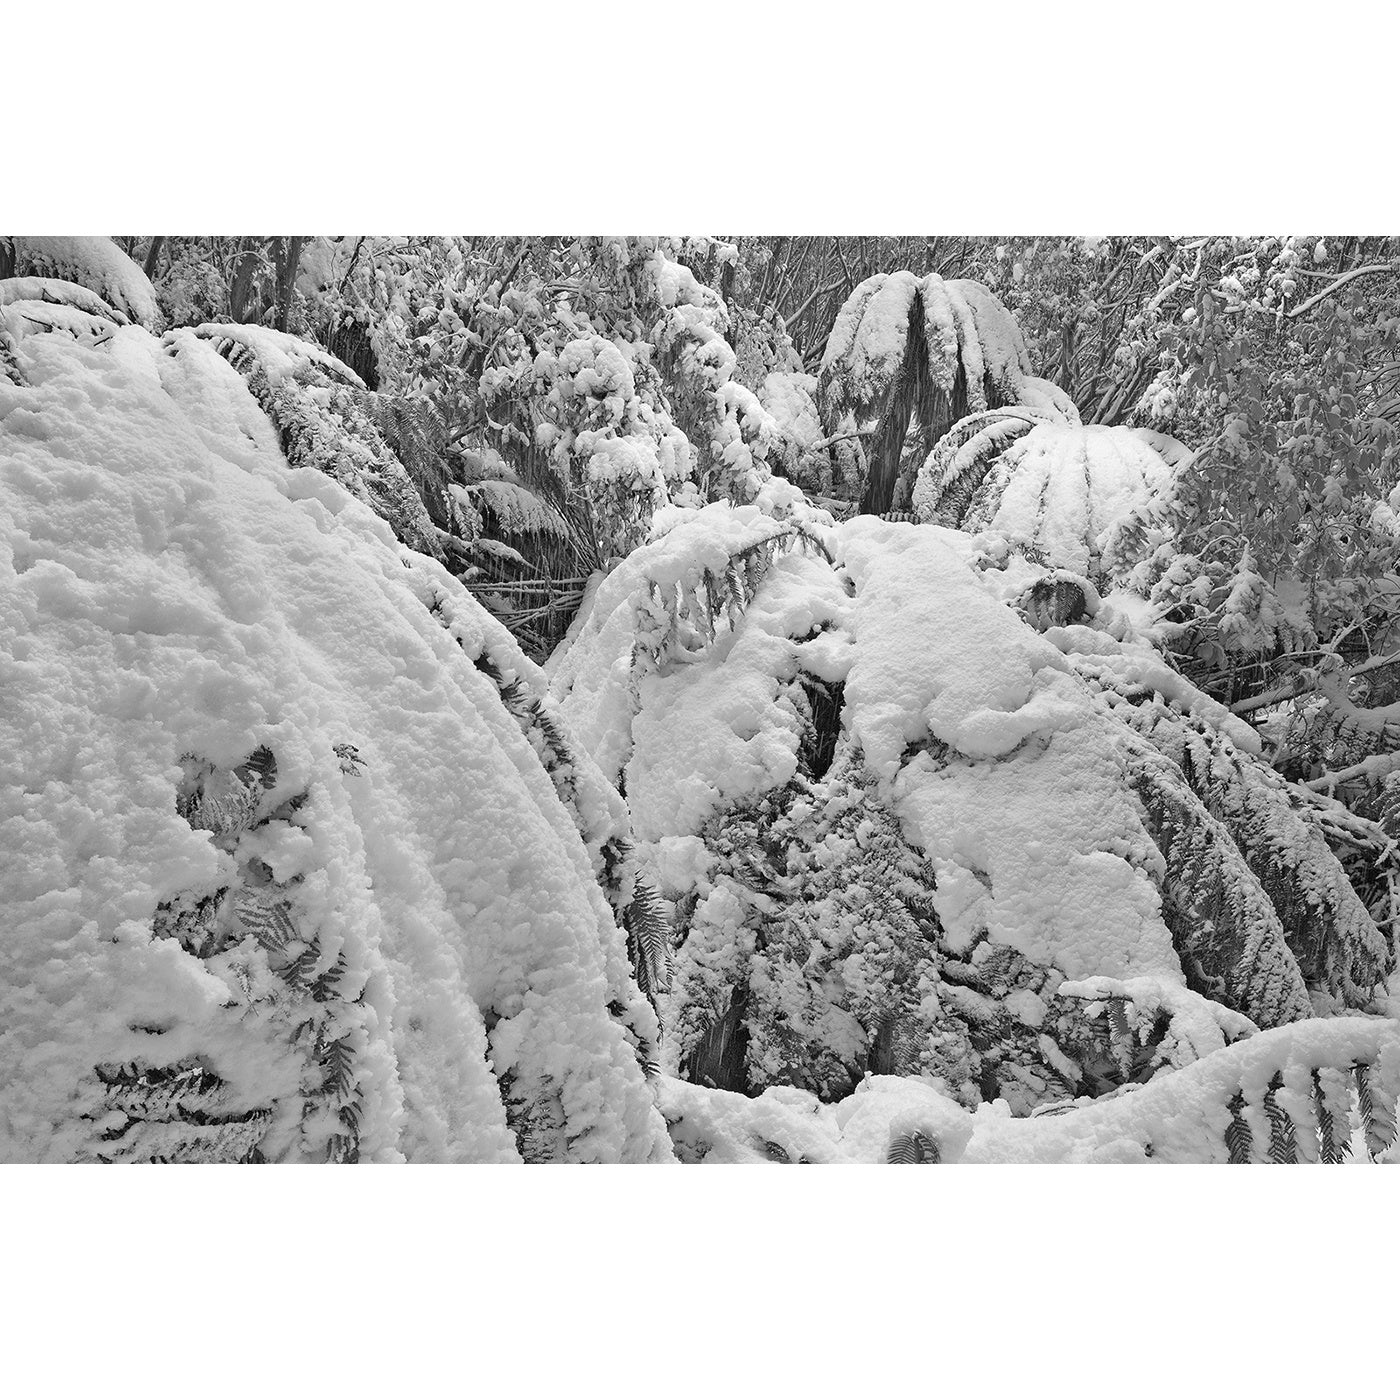 Chris Bell – Winter Snowfall on Man Ferns